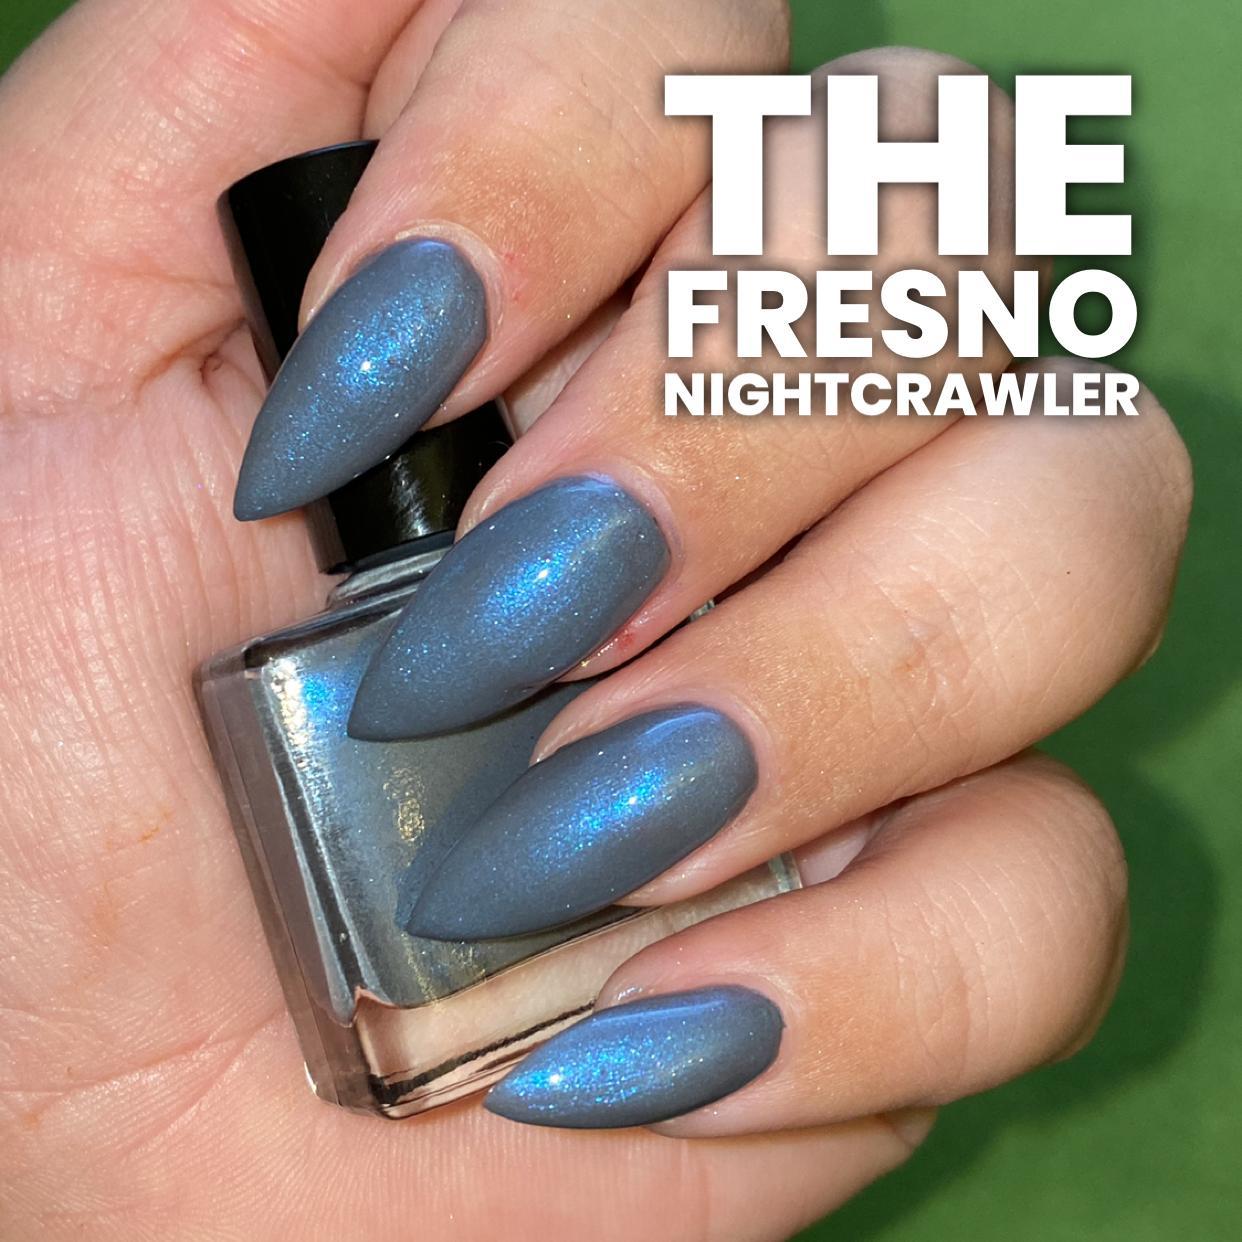 The Fresno Nightcrawler